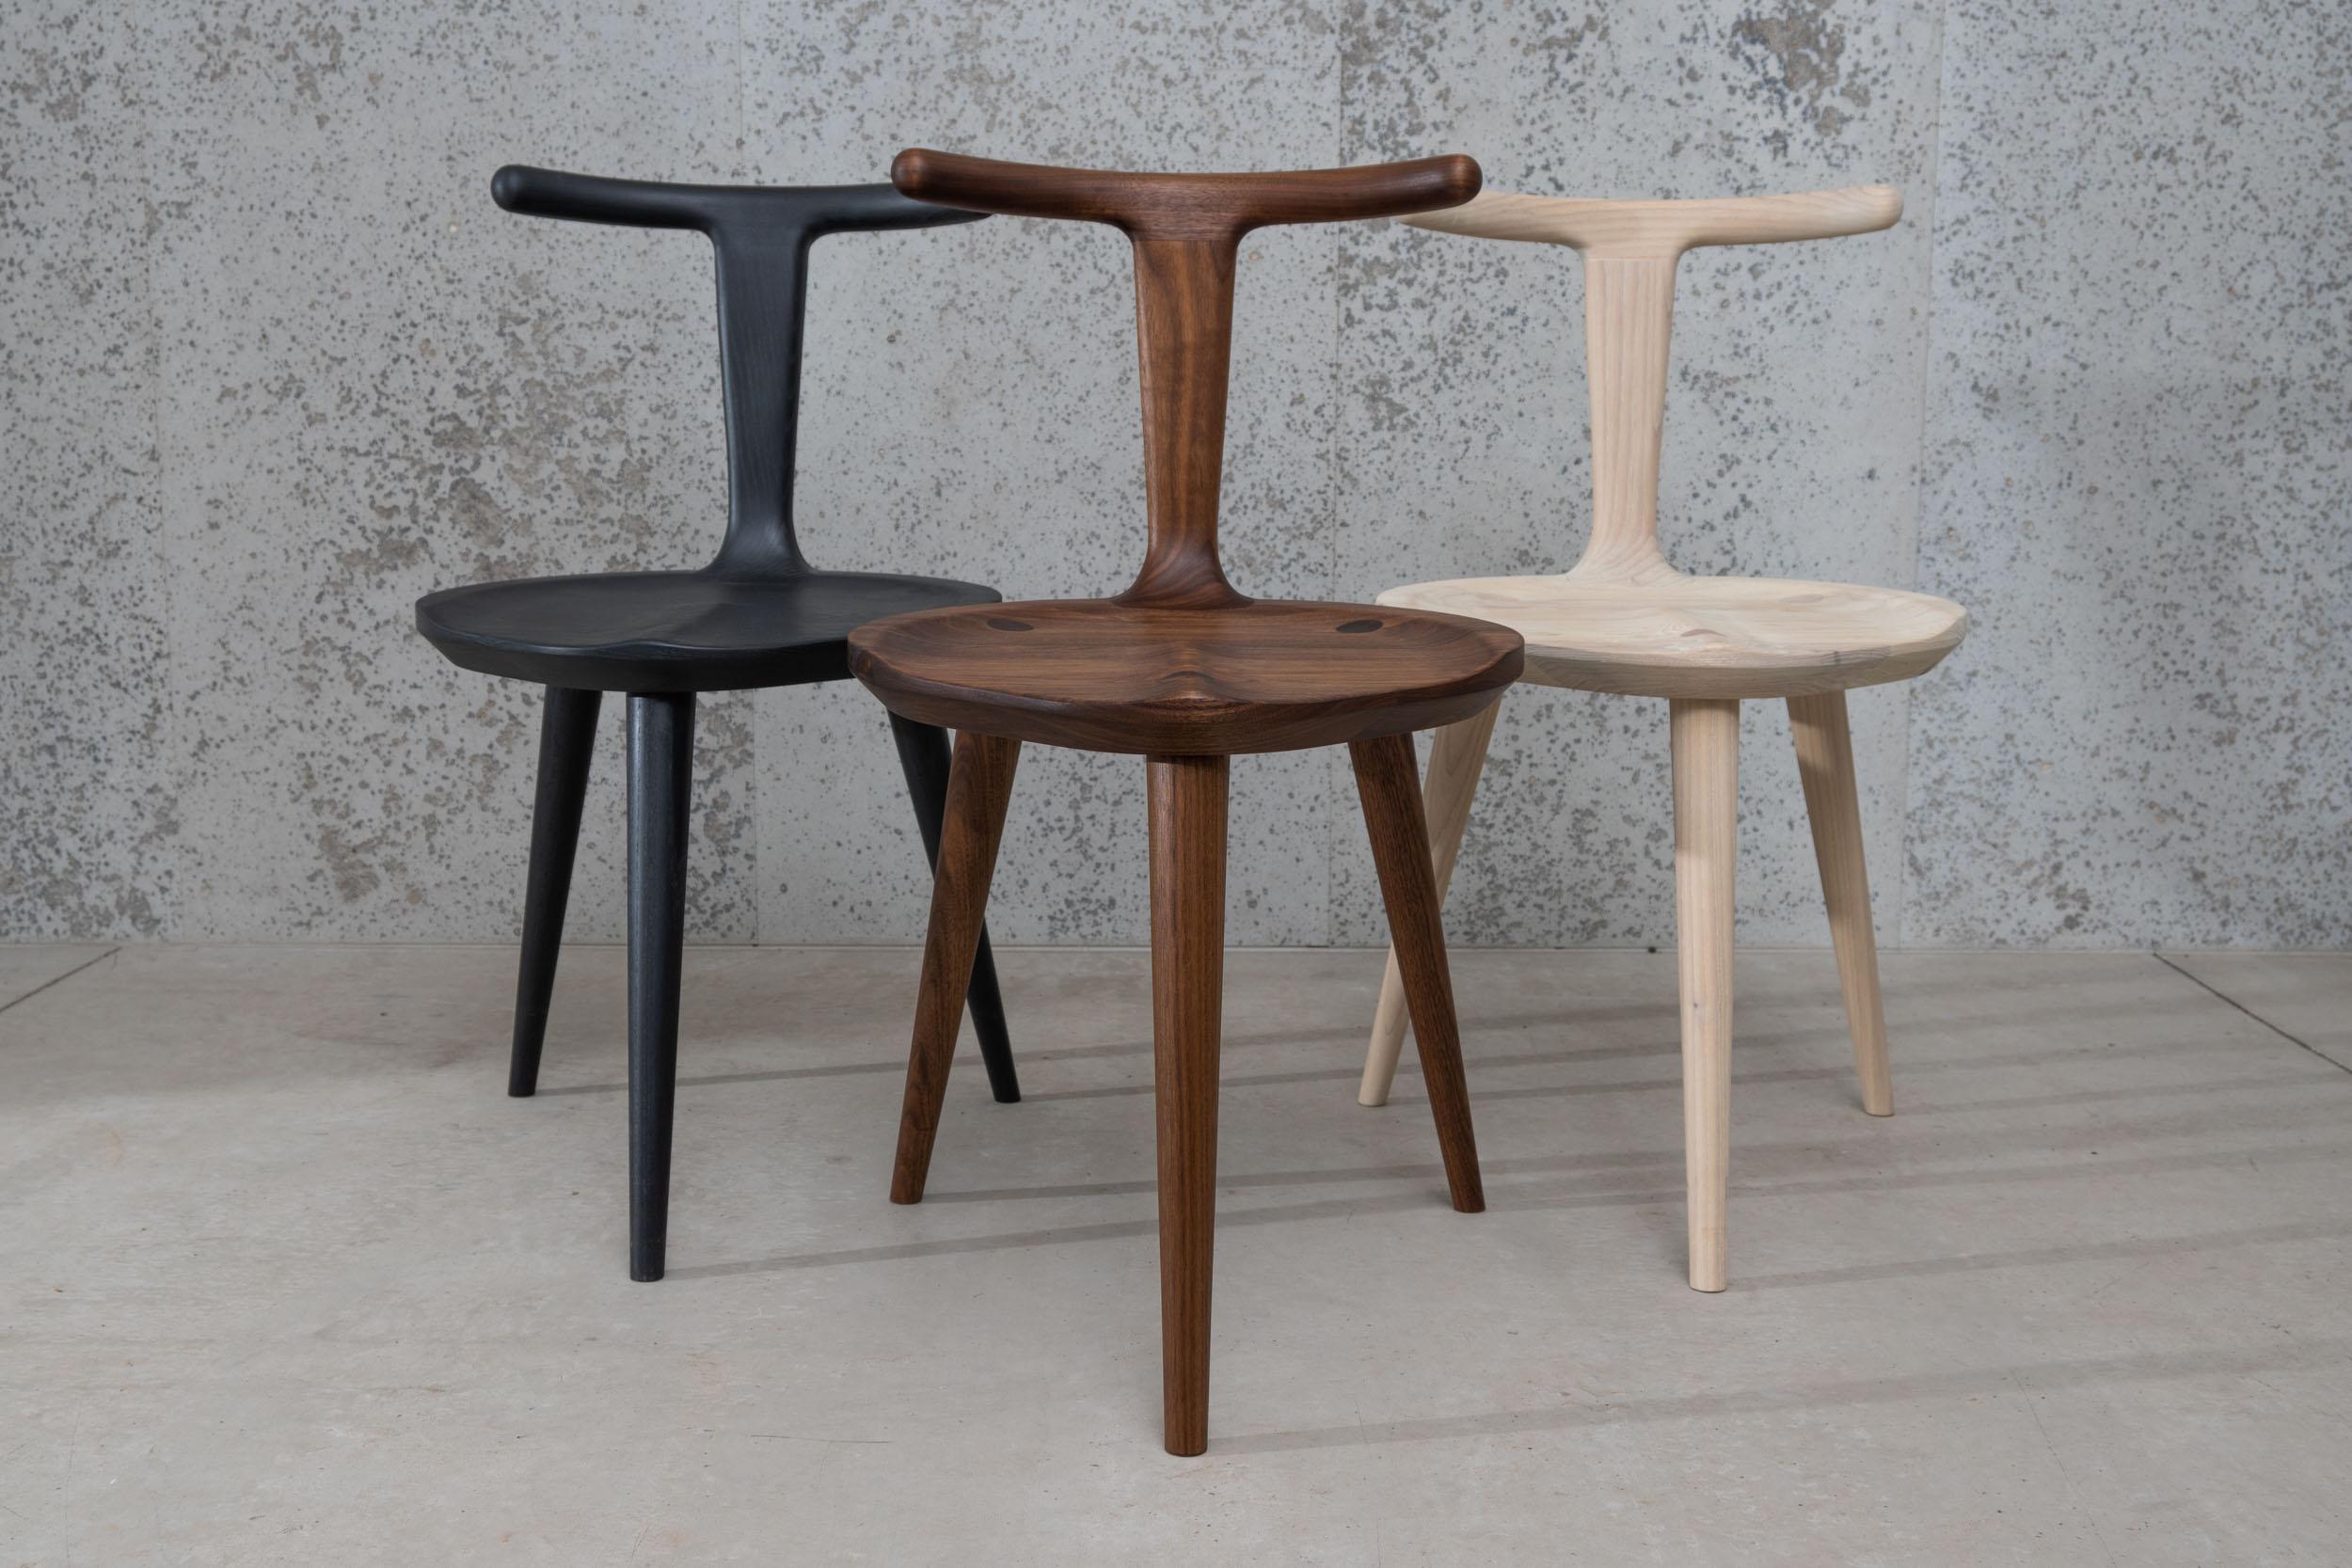 3 legged wooden chair